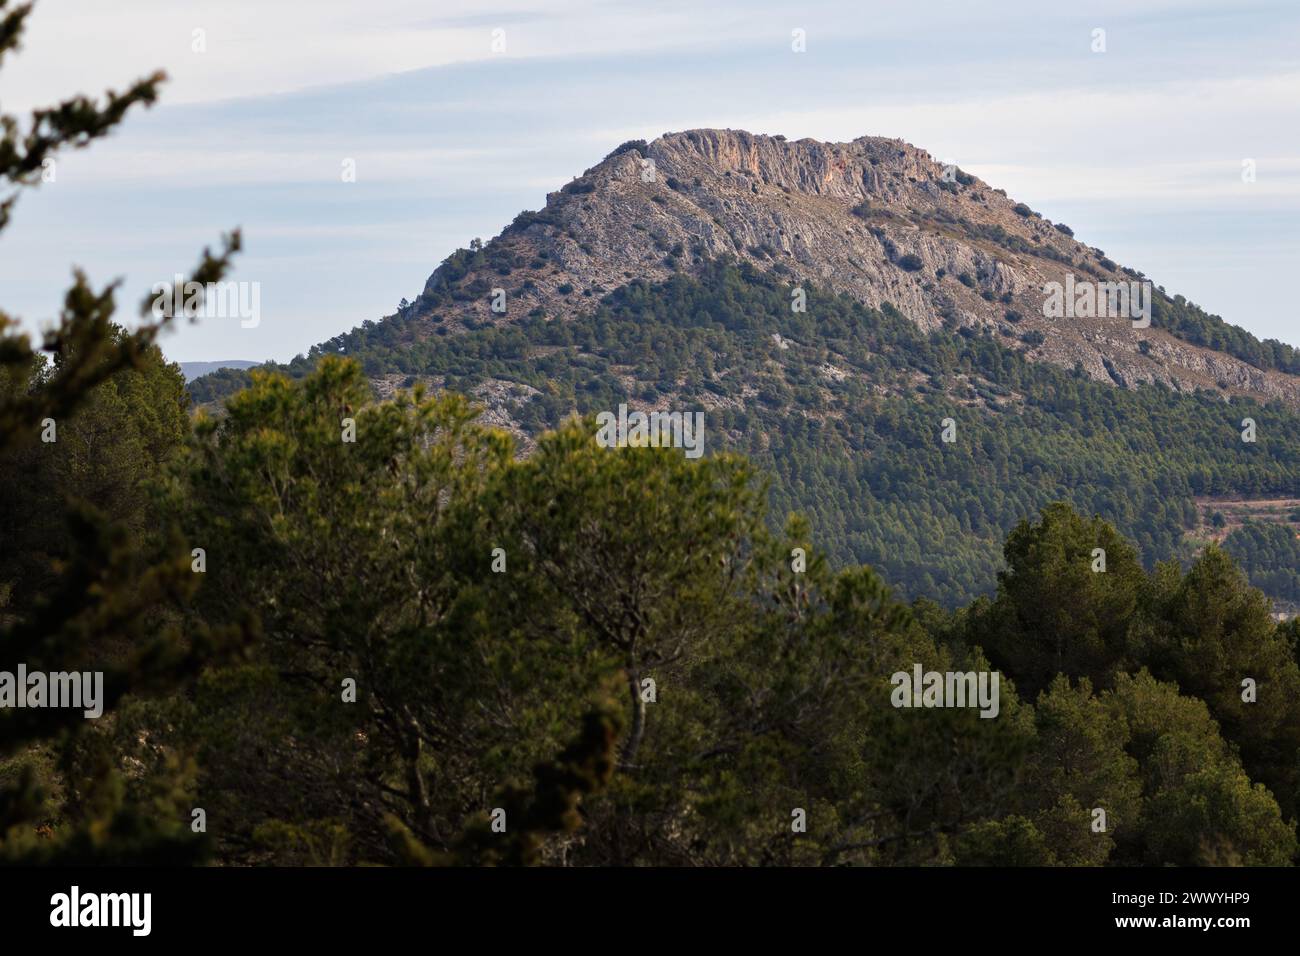 Top of La Serreta mountain from the natural area of San Antonio in Alcoy, Spain Stock Photo